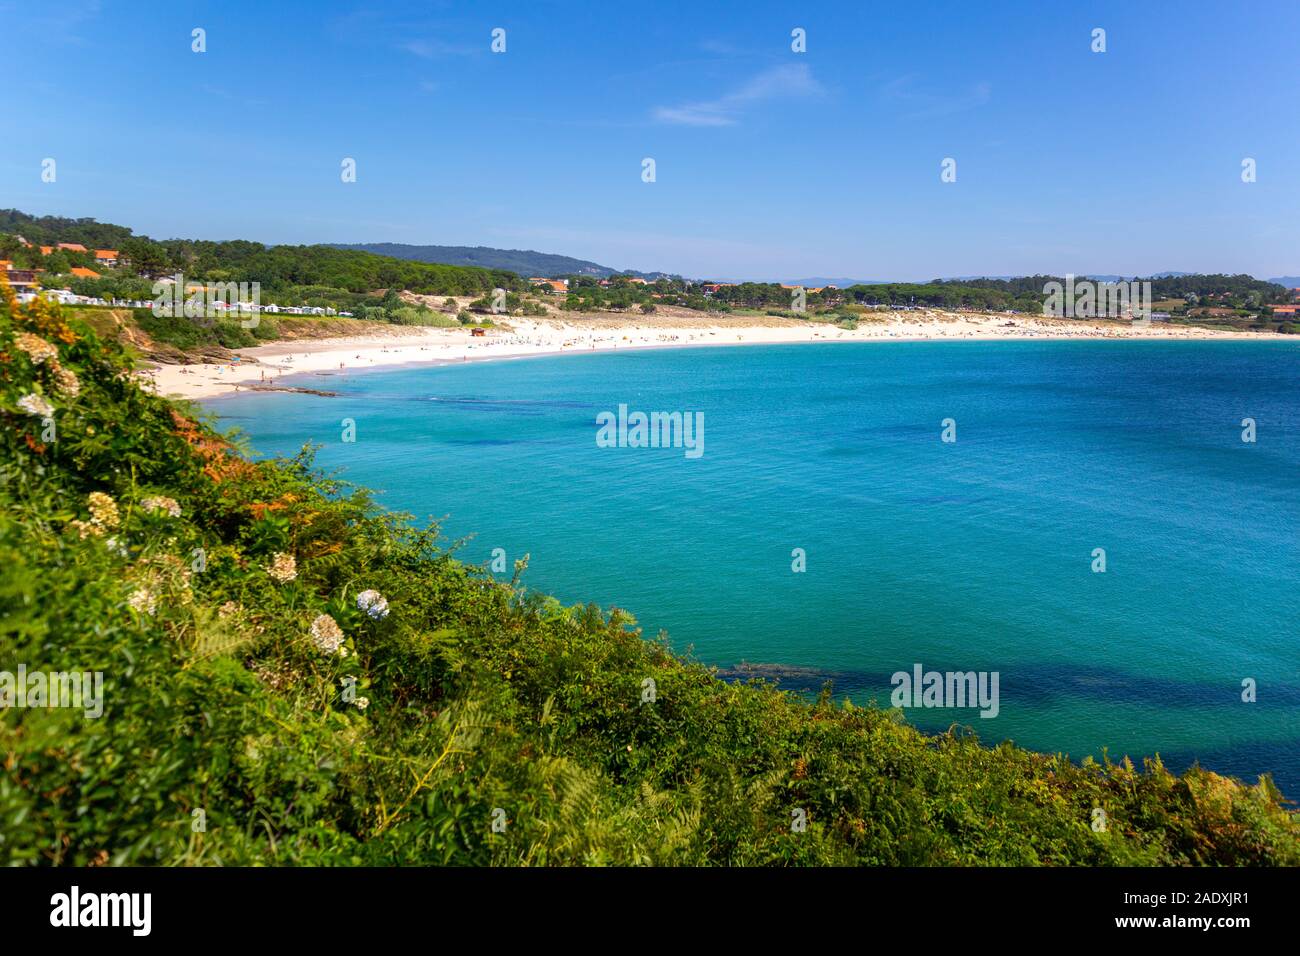 Idyllic bay with white sandy beach at the death coast, Laxe, Galicia, Spain Stock Photo